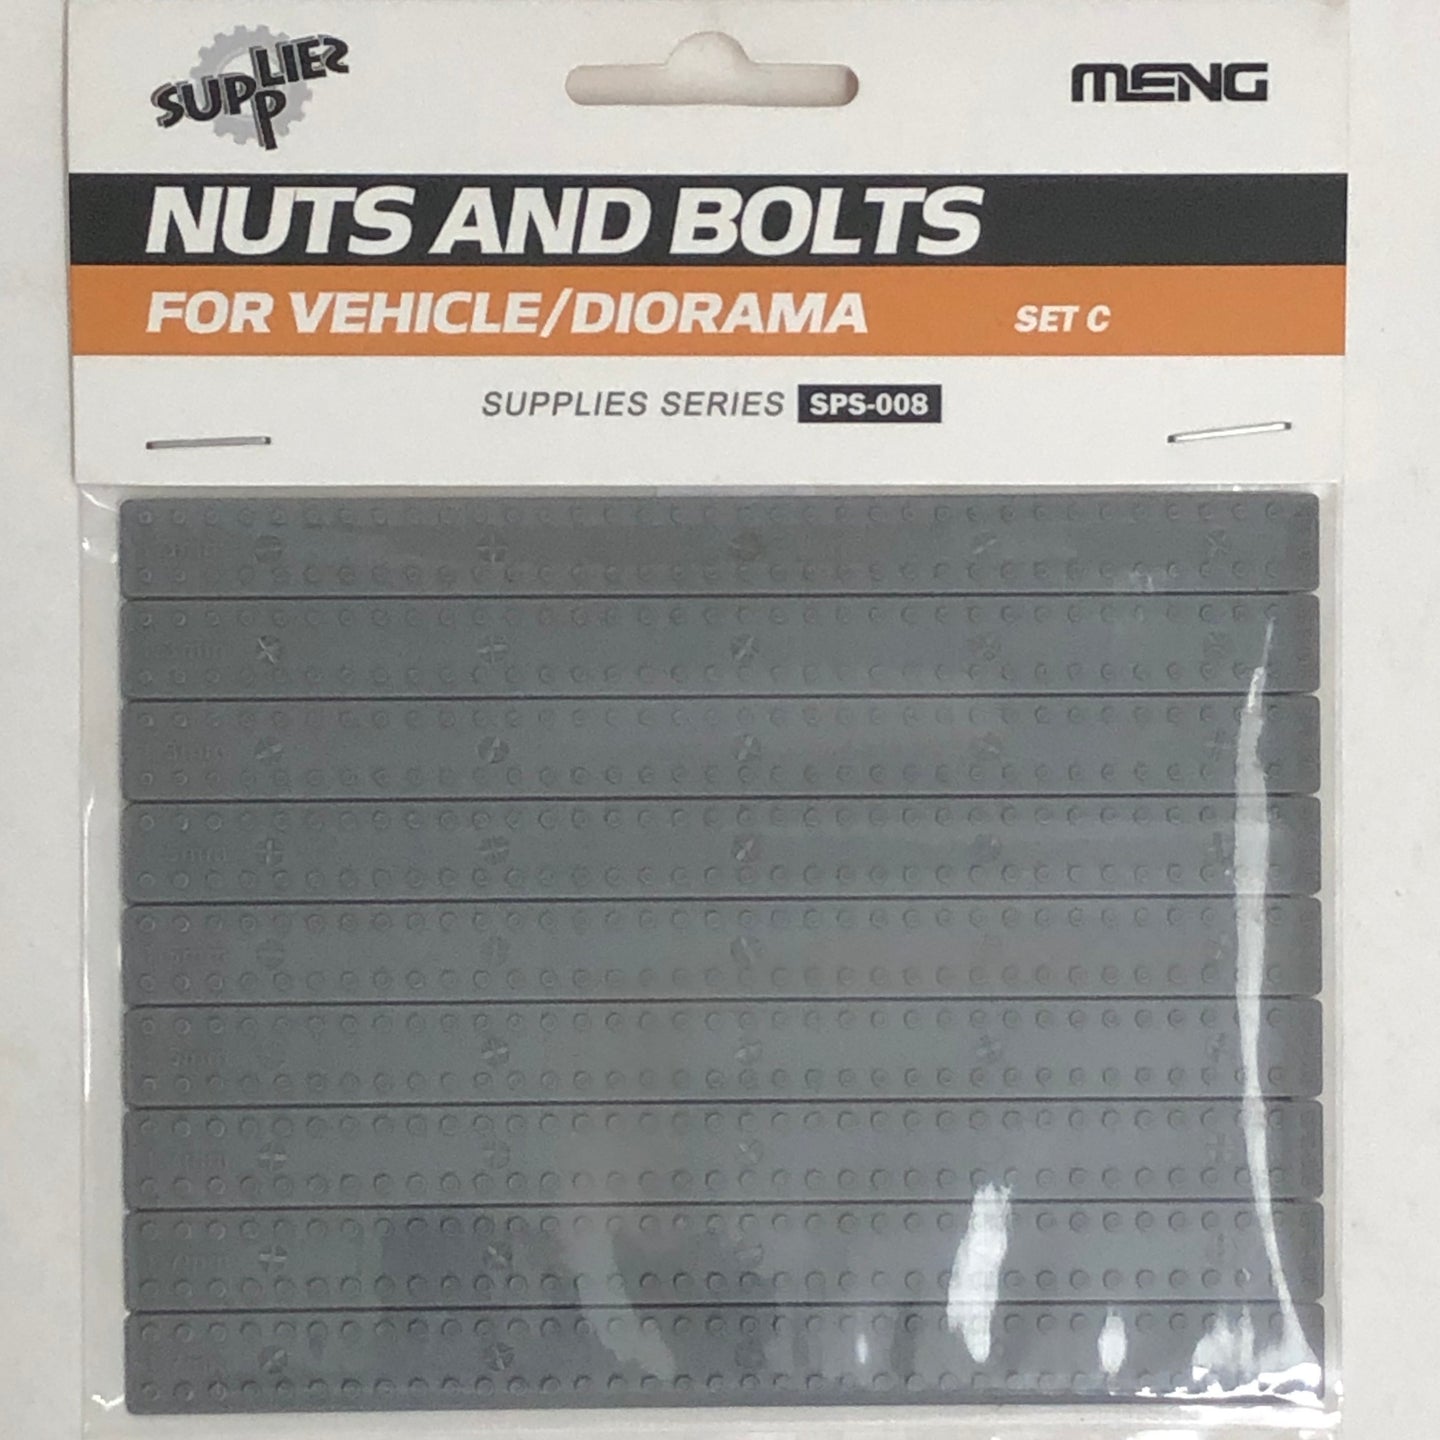 Meng Nuts And Bolt Set C SPS-008